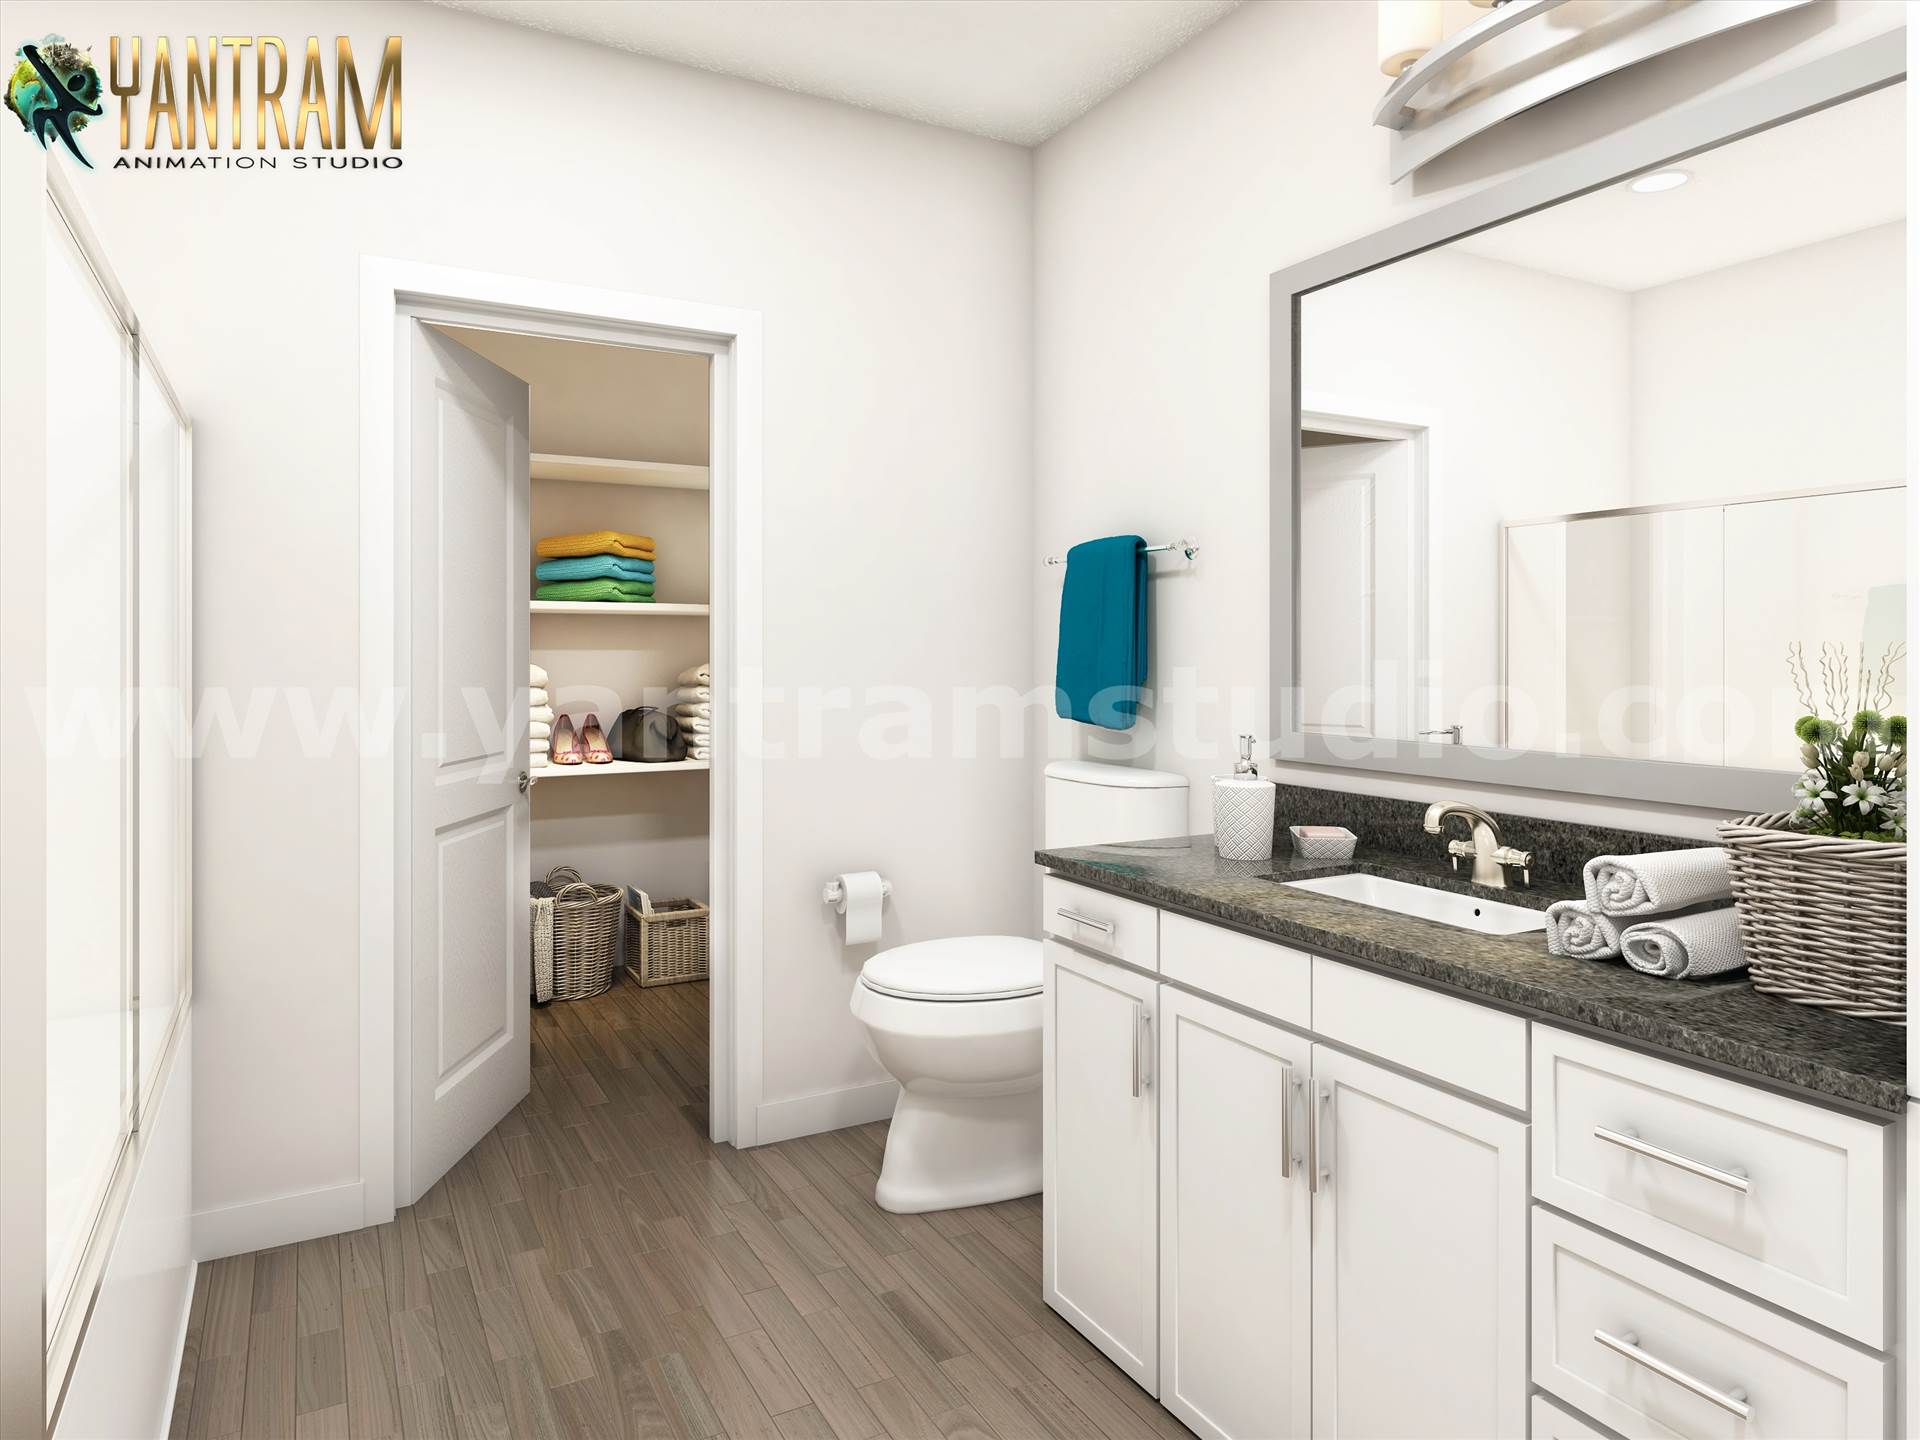 Elegance_Bathroom_Architectural_Design_Home_Plans_by_Architectural_Planning_Companies.jpg -  by Yantramarchitecturaldesignstudio